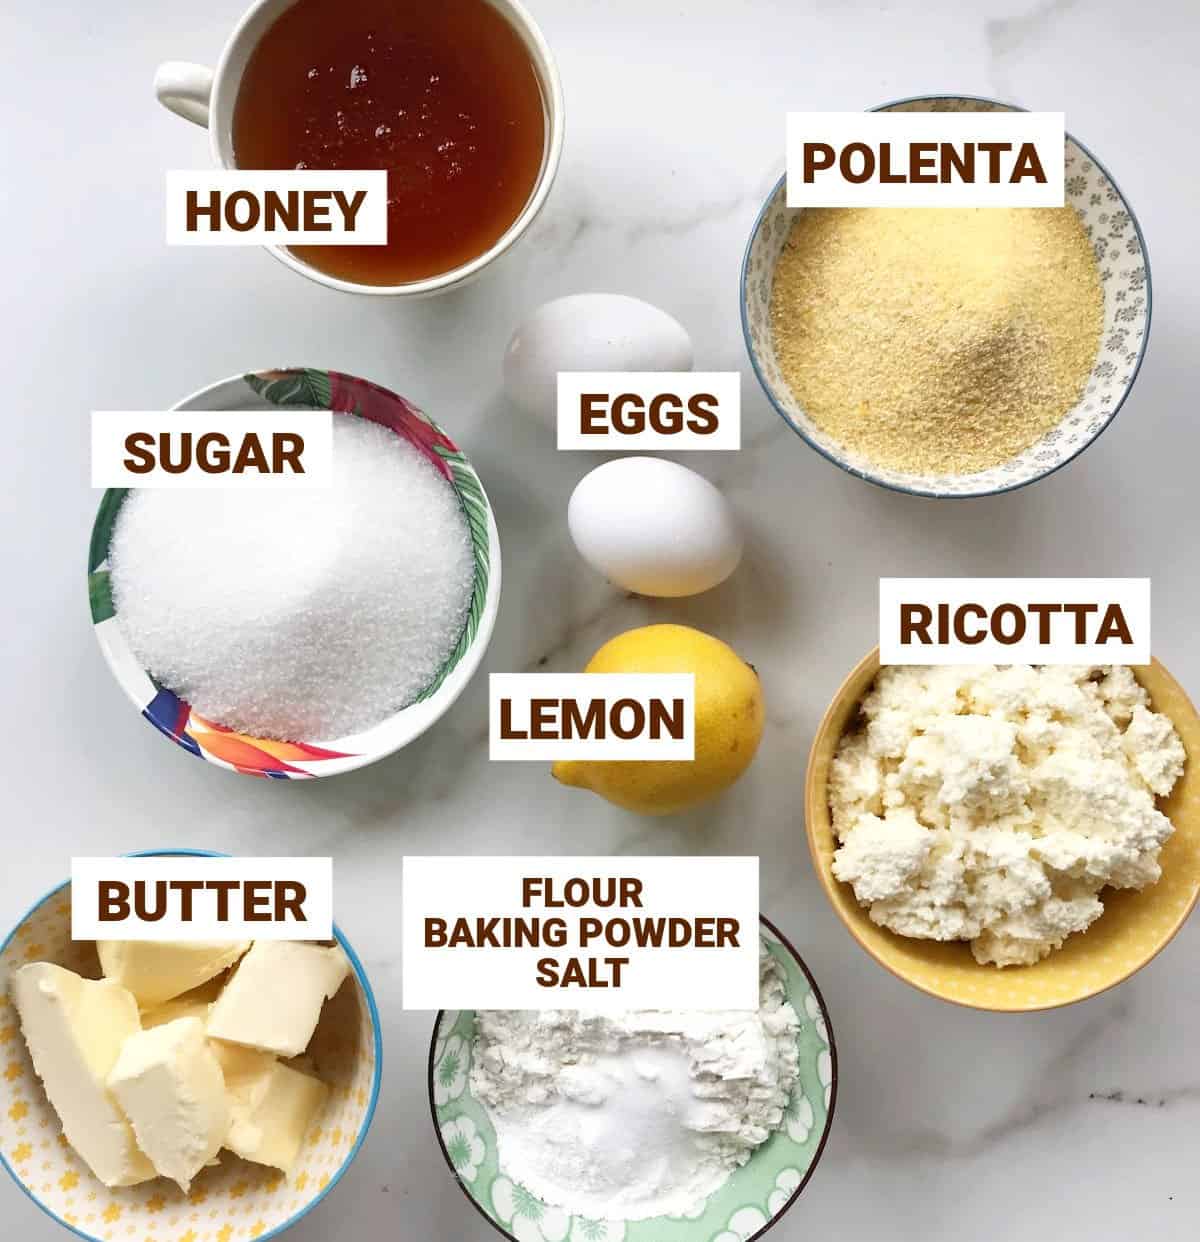 Lemon polenta cake ingredients in bowls on white surface including ricotta, butter, honey, eggs, sugar, flour.